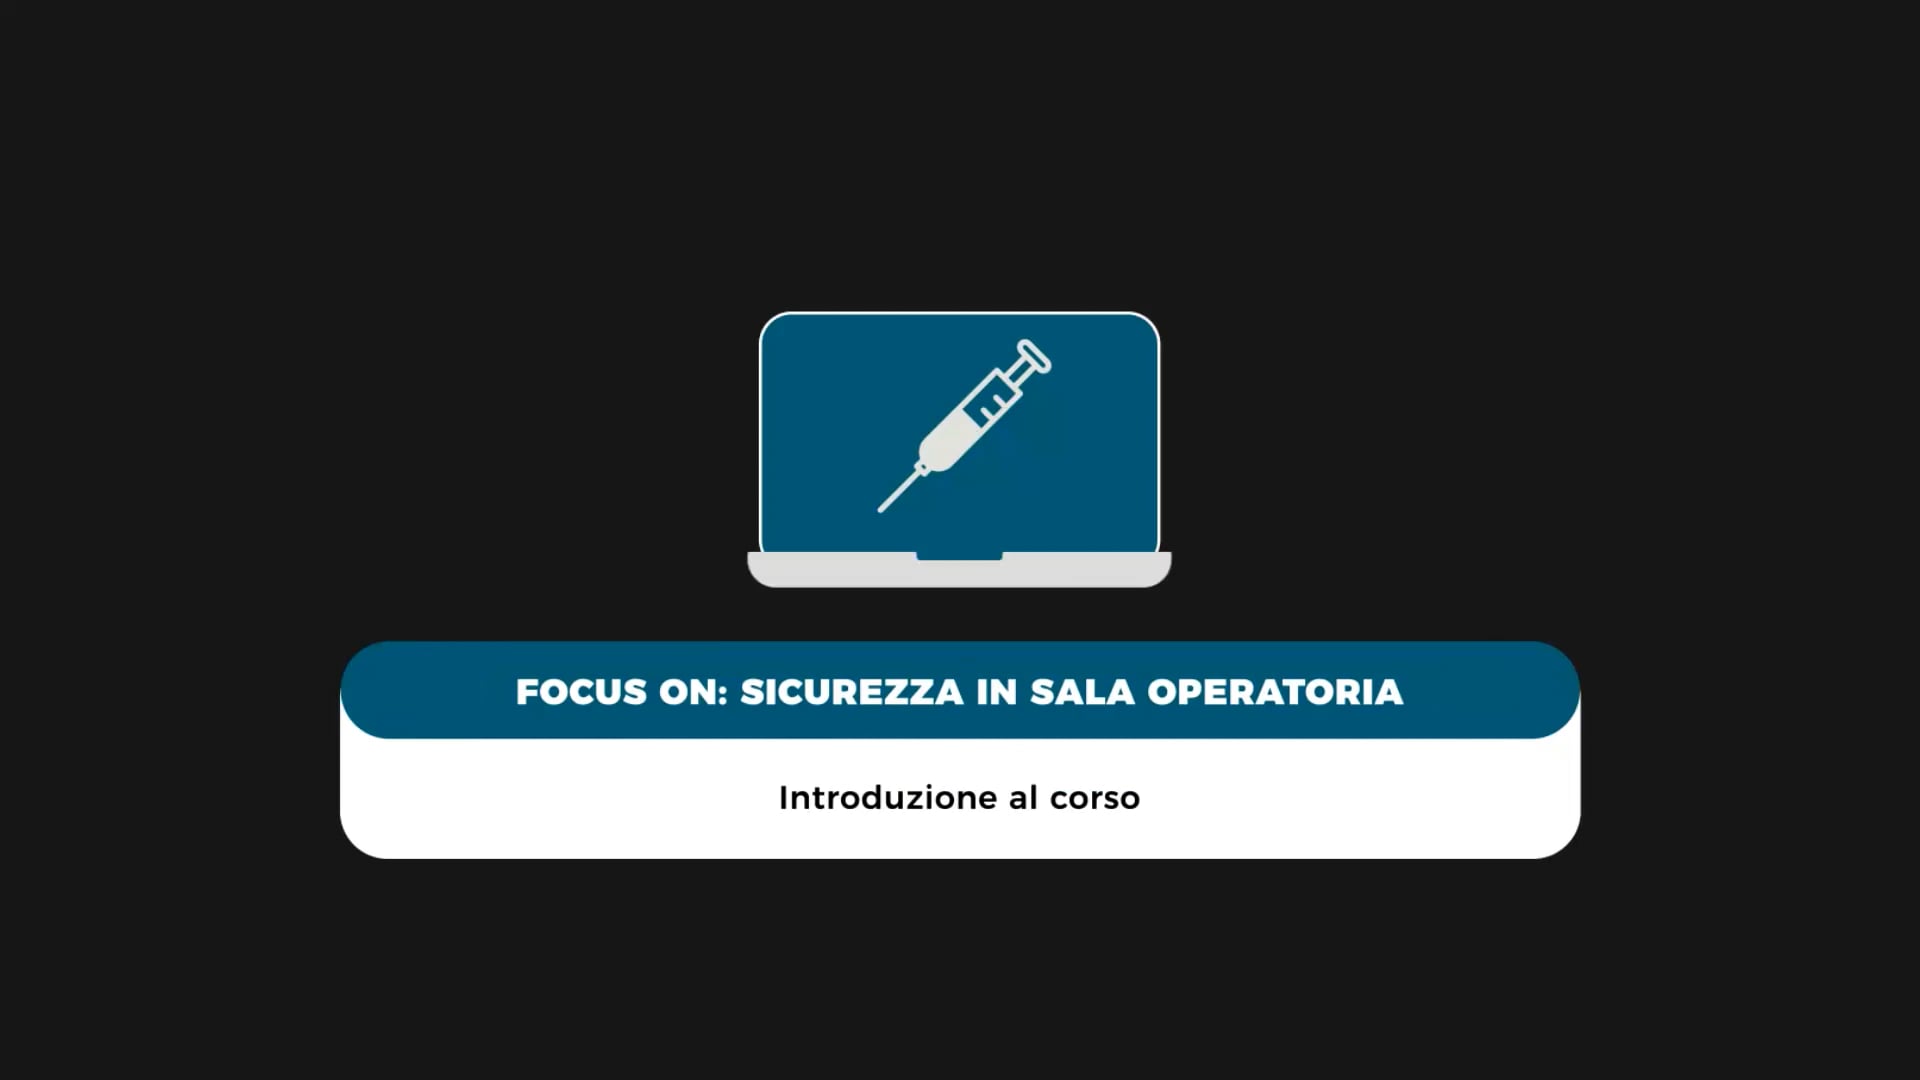 FocusOnSicurezzaInSalaOperatoria-Scarabelli-Introduzione al corso-New.mp4